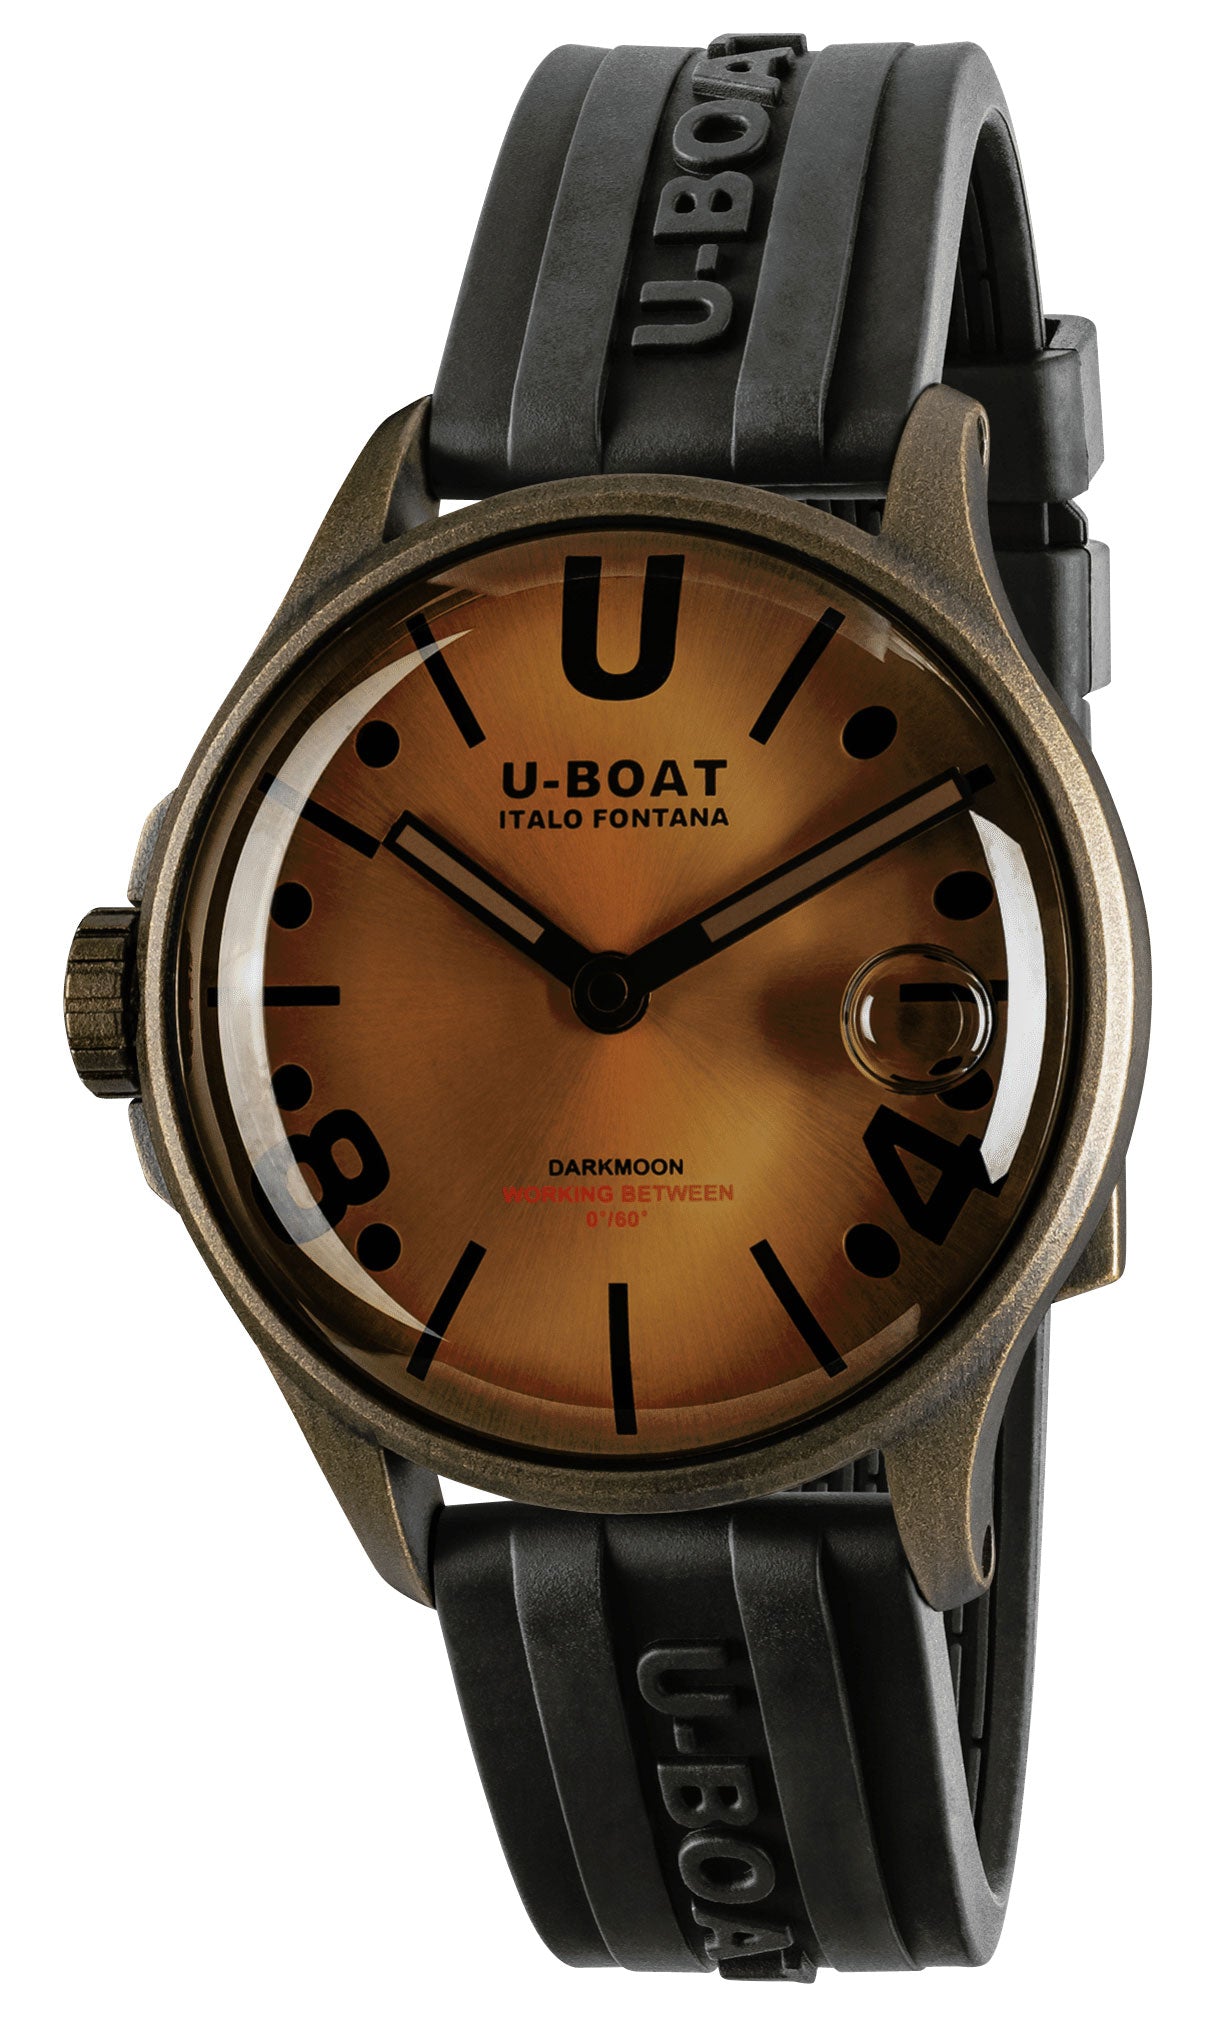 update alt-text with template Watches - Mens-U-Boat-9547-35 - 40 mm, 40 - 45 mm, bronze case, brown, Darkmoon, mens, menswatches, new arrivals, round, rpSKU_9501, rpSKU_9545, rpSKU_9549, rpSKU_9551, rpSKU_9552, rubber, swiss quartz, U-Boat, watches-Watches & Beyond